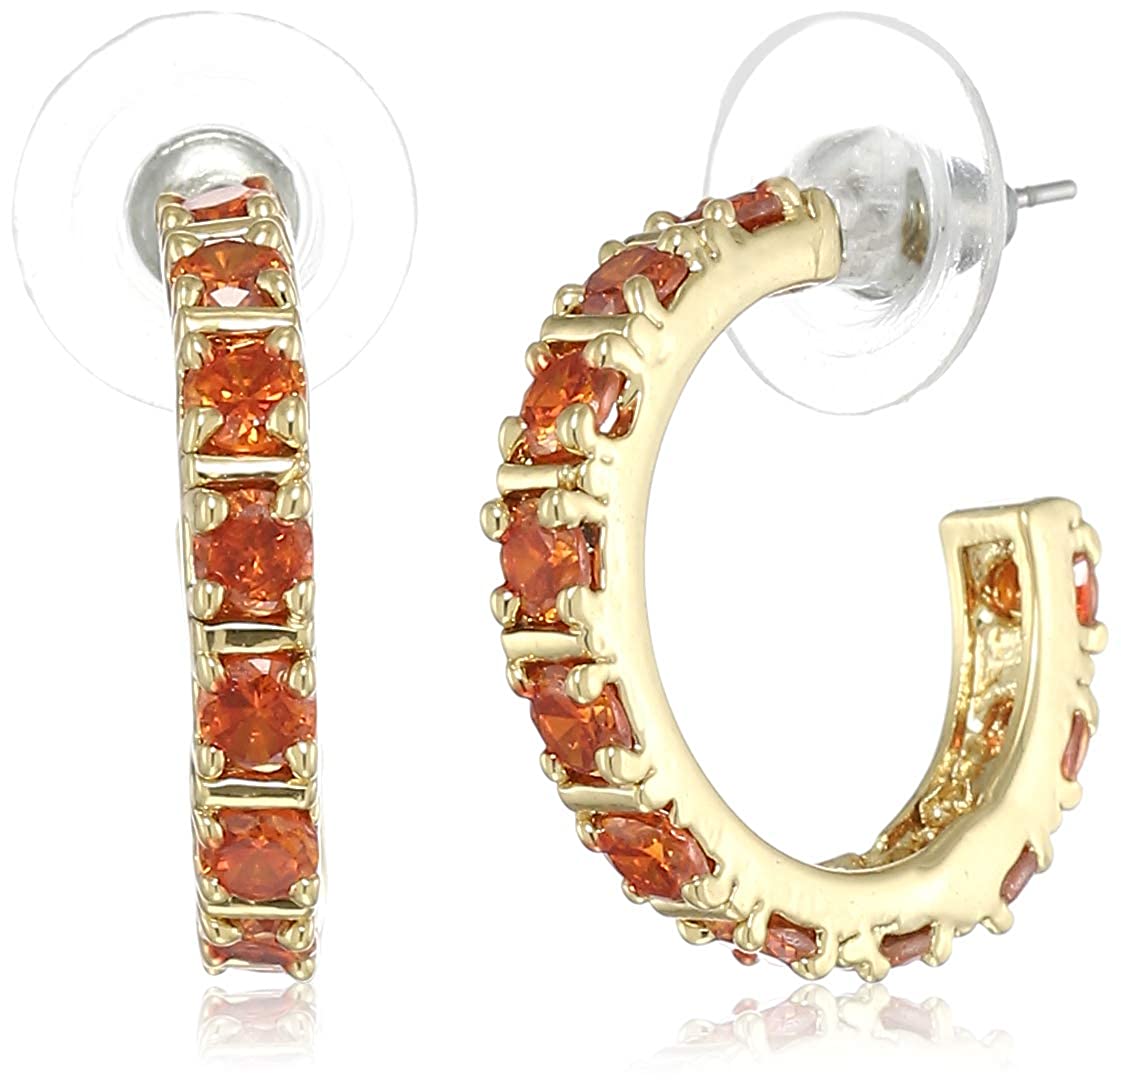 Estele 24 karat Gold Plated Exquisite Orange Crystal Pendant Ring Bracelet and Earrings Combo for Girls